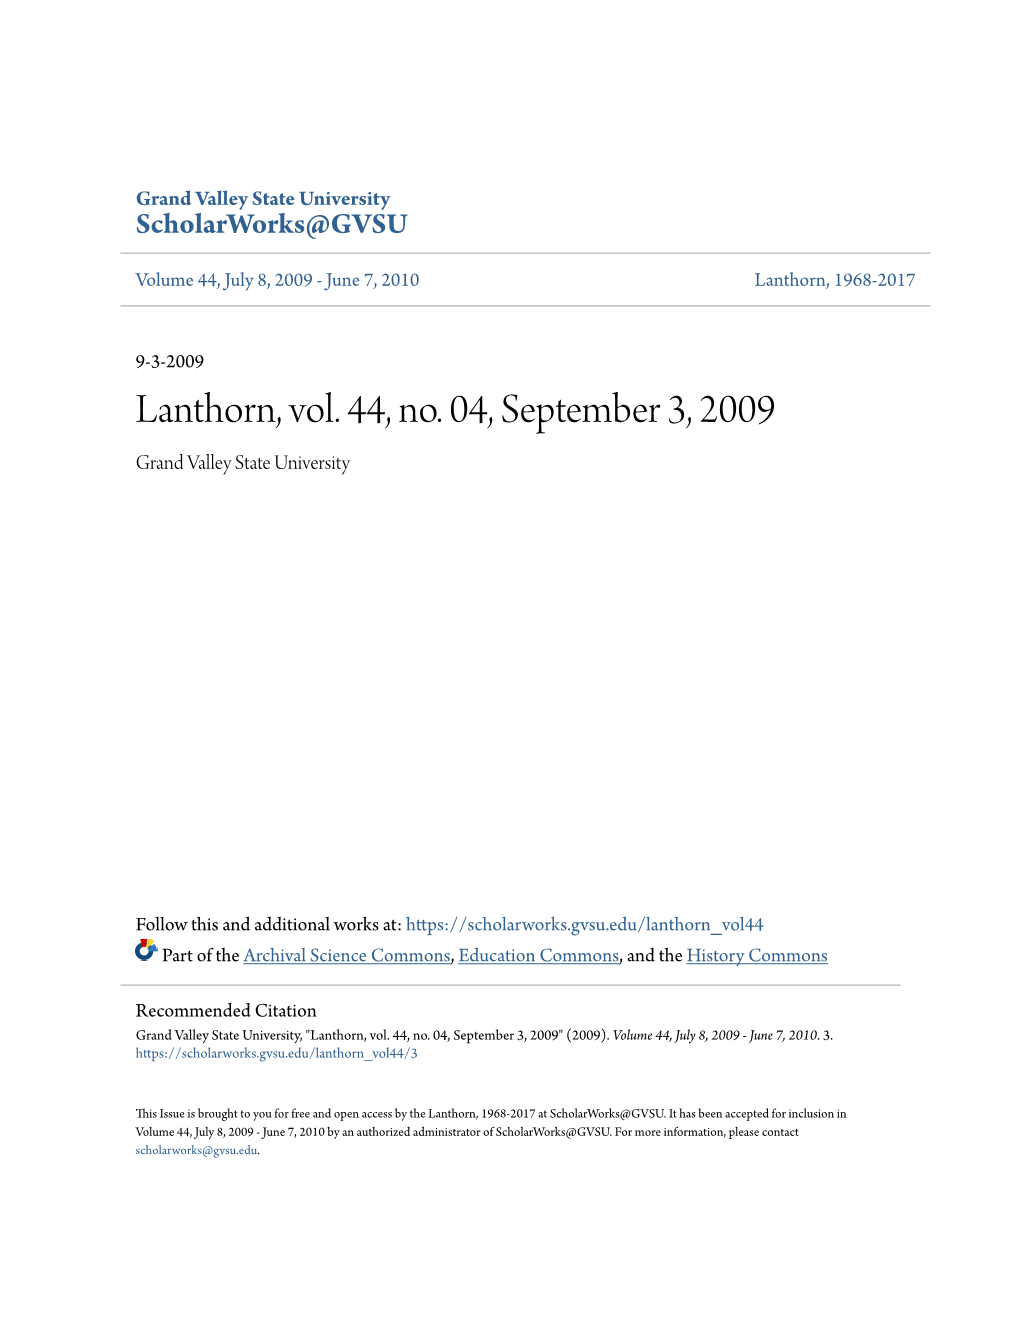 Lanthorn, Vol. 44, No. 04, September 3, 2009 Grand Valley State University